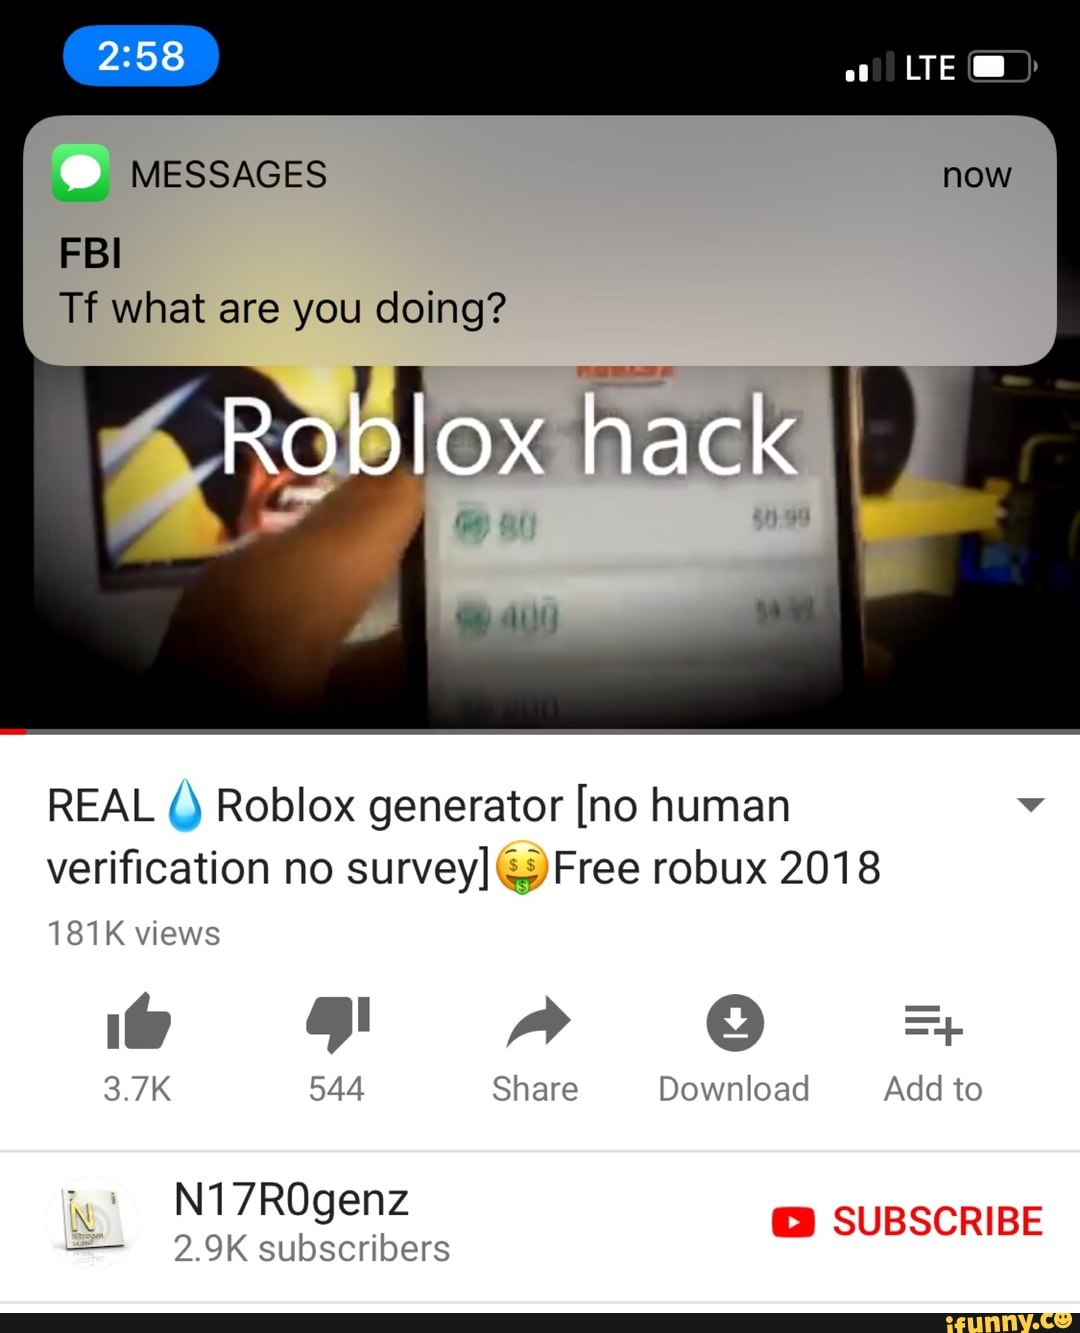 Real Roblox Generator No Human Verification Survey Free Robux 2018 Ifunny - free robux real 2018 no human verification